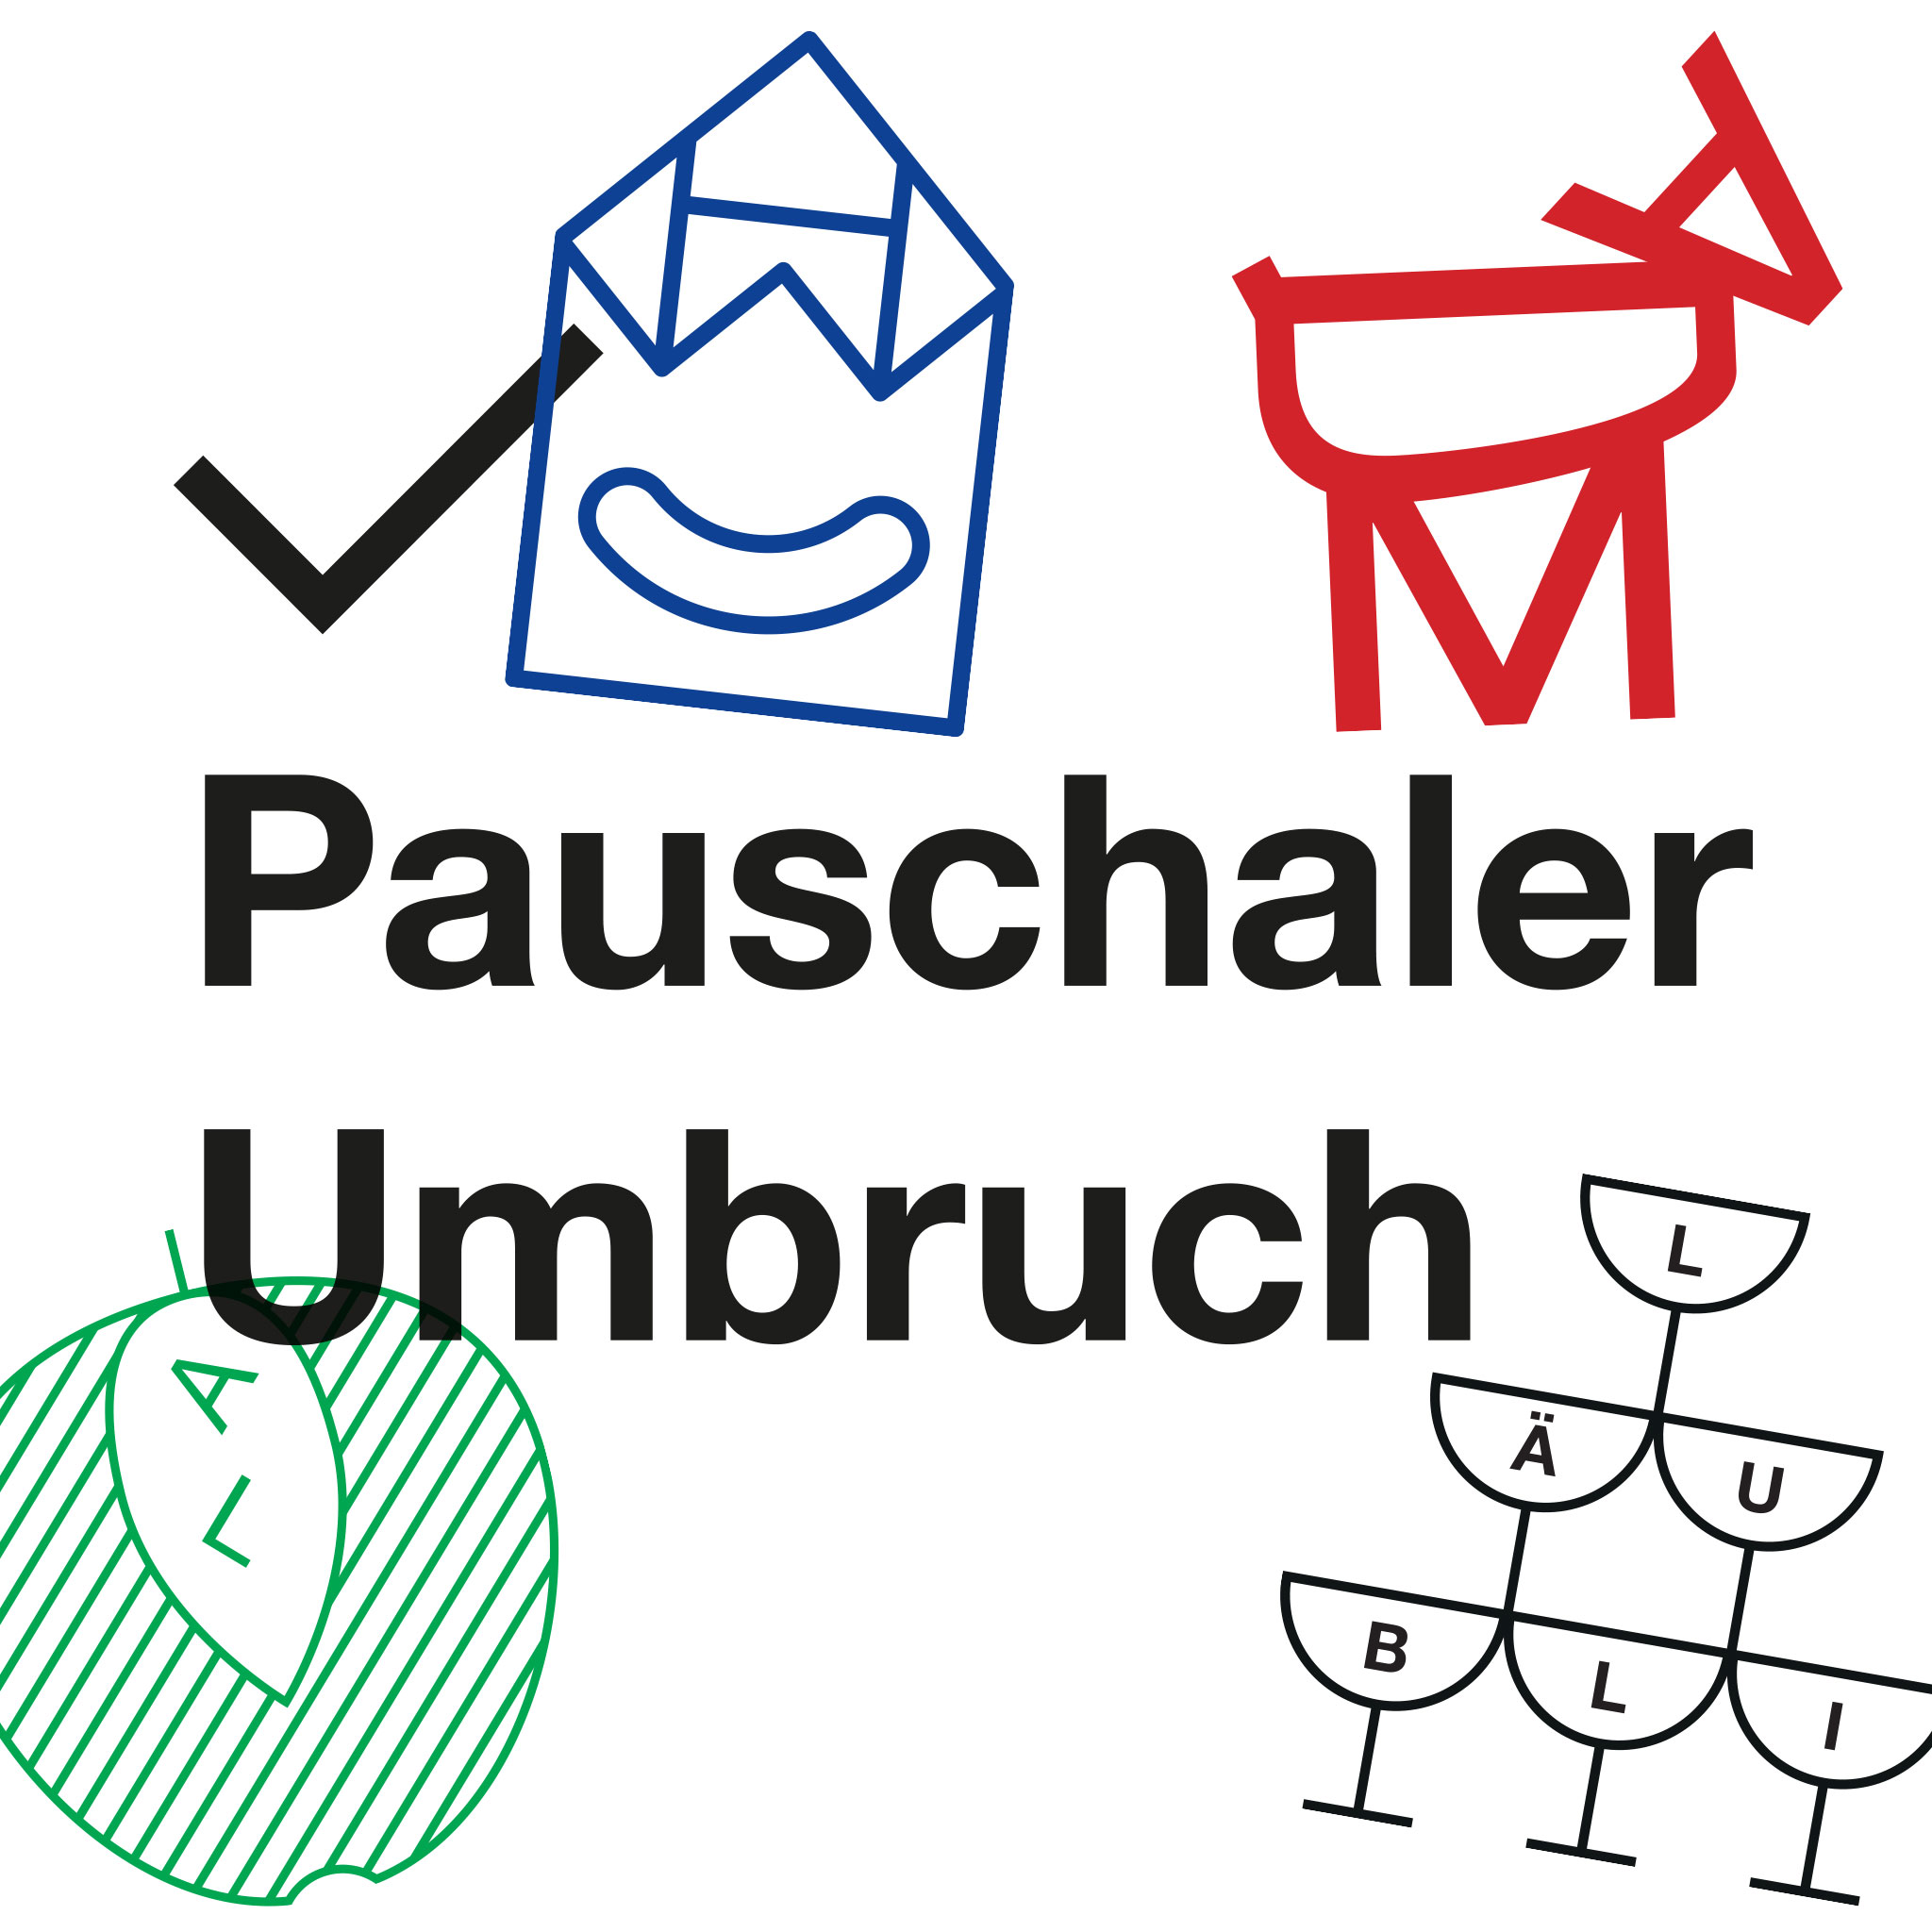 Pauschaler Umbruch #1:<br>Persönlicher Stempel